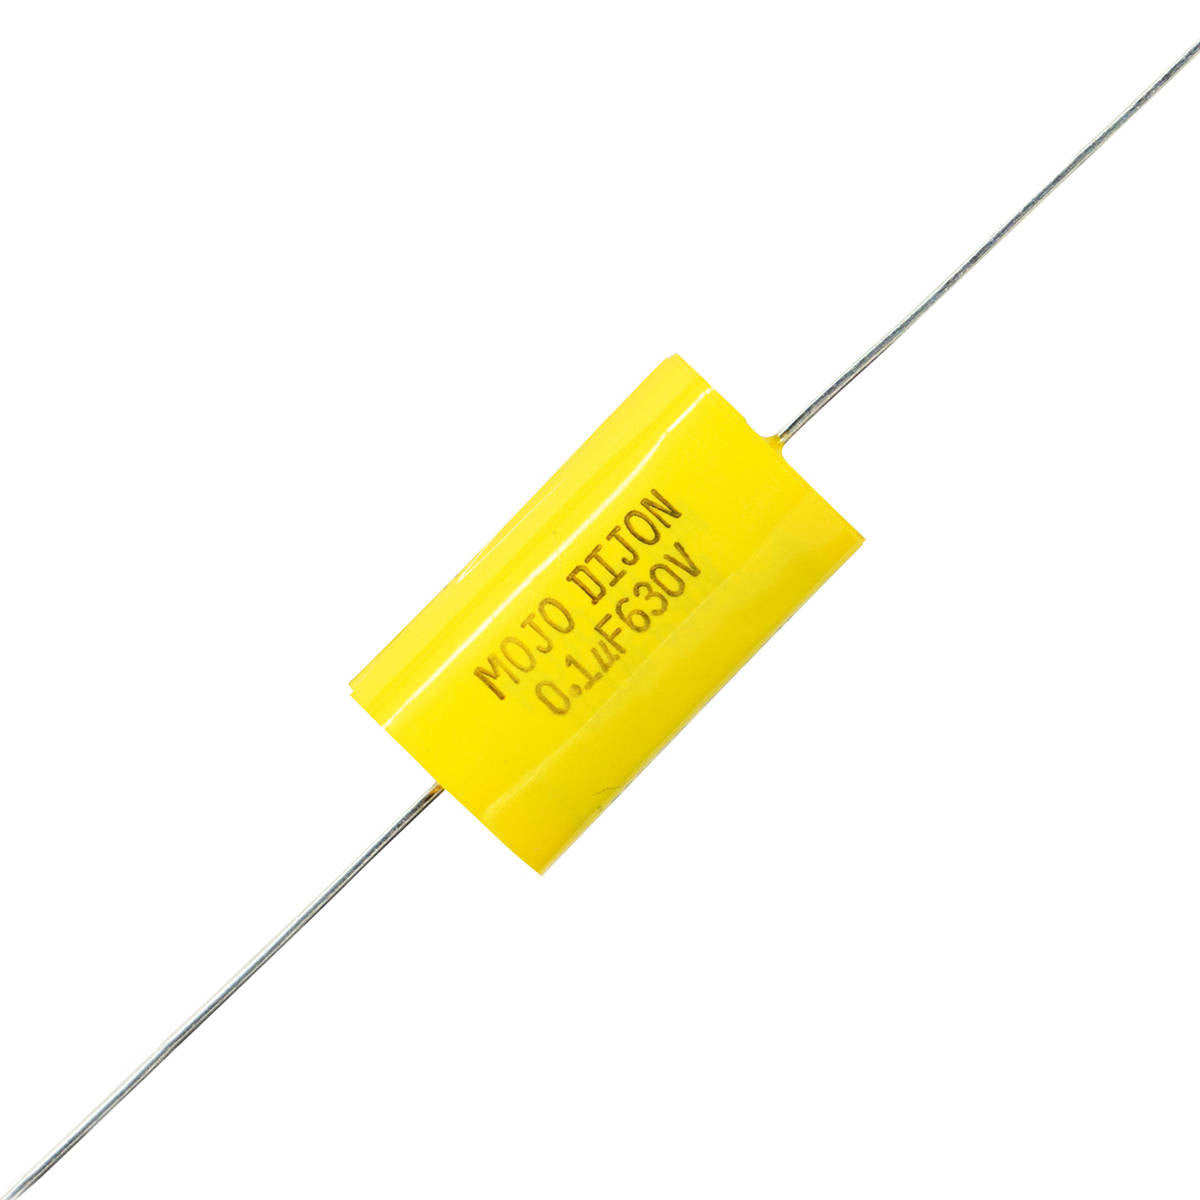 Amp capacitor – film and foil - Mojotone Dijon - coupling caps - 0.1uf @ 630V